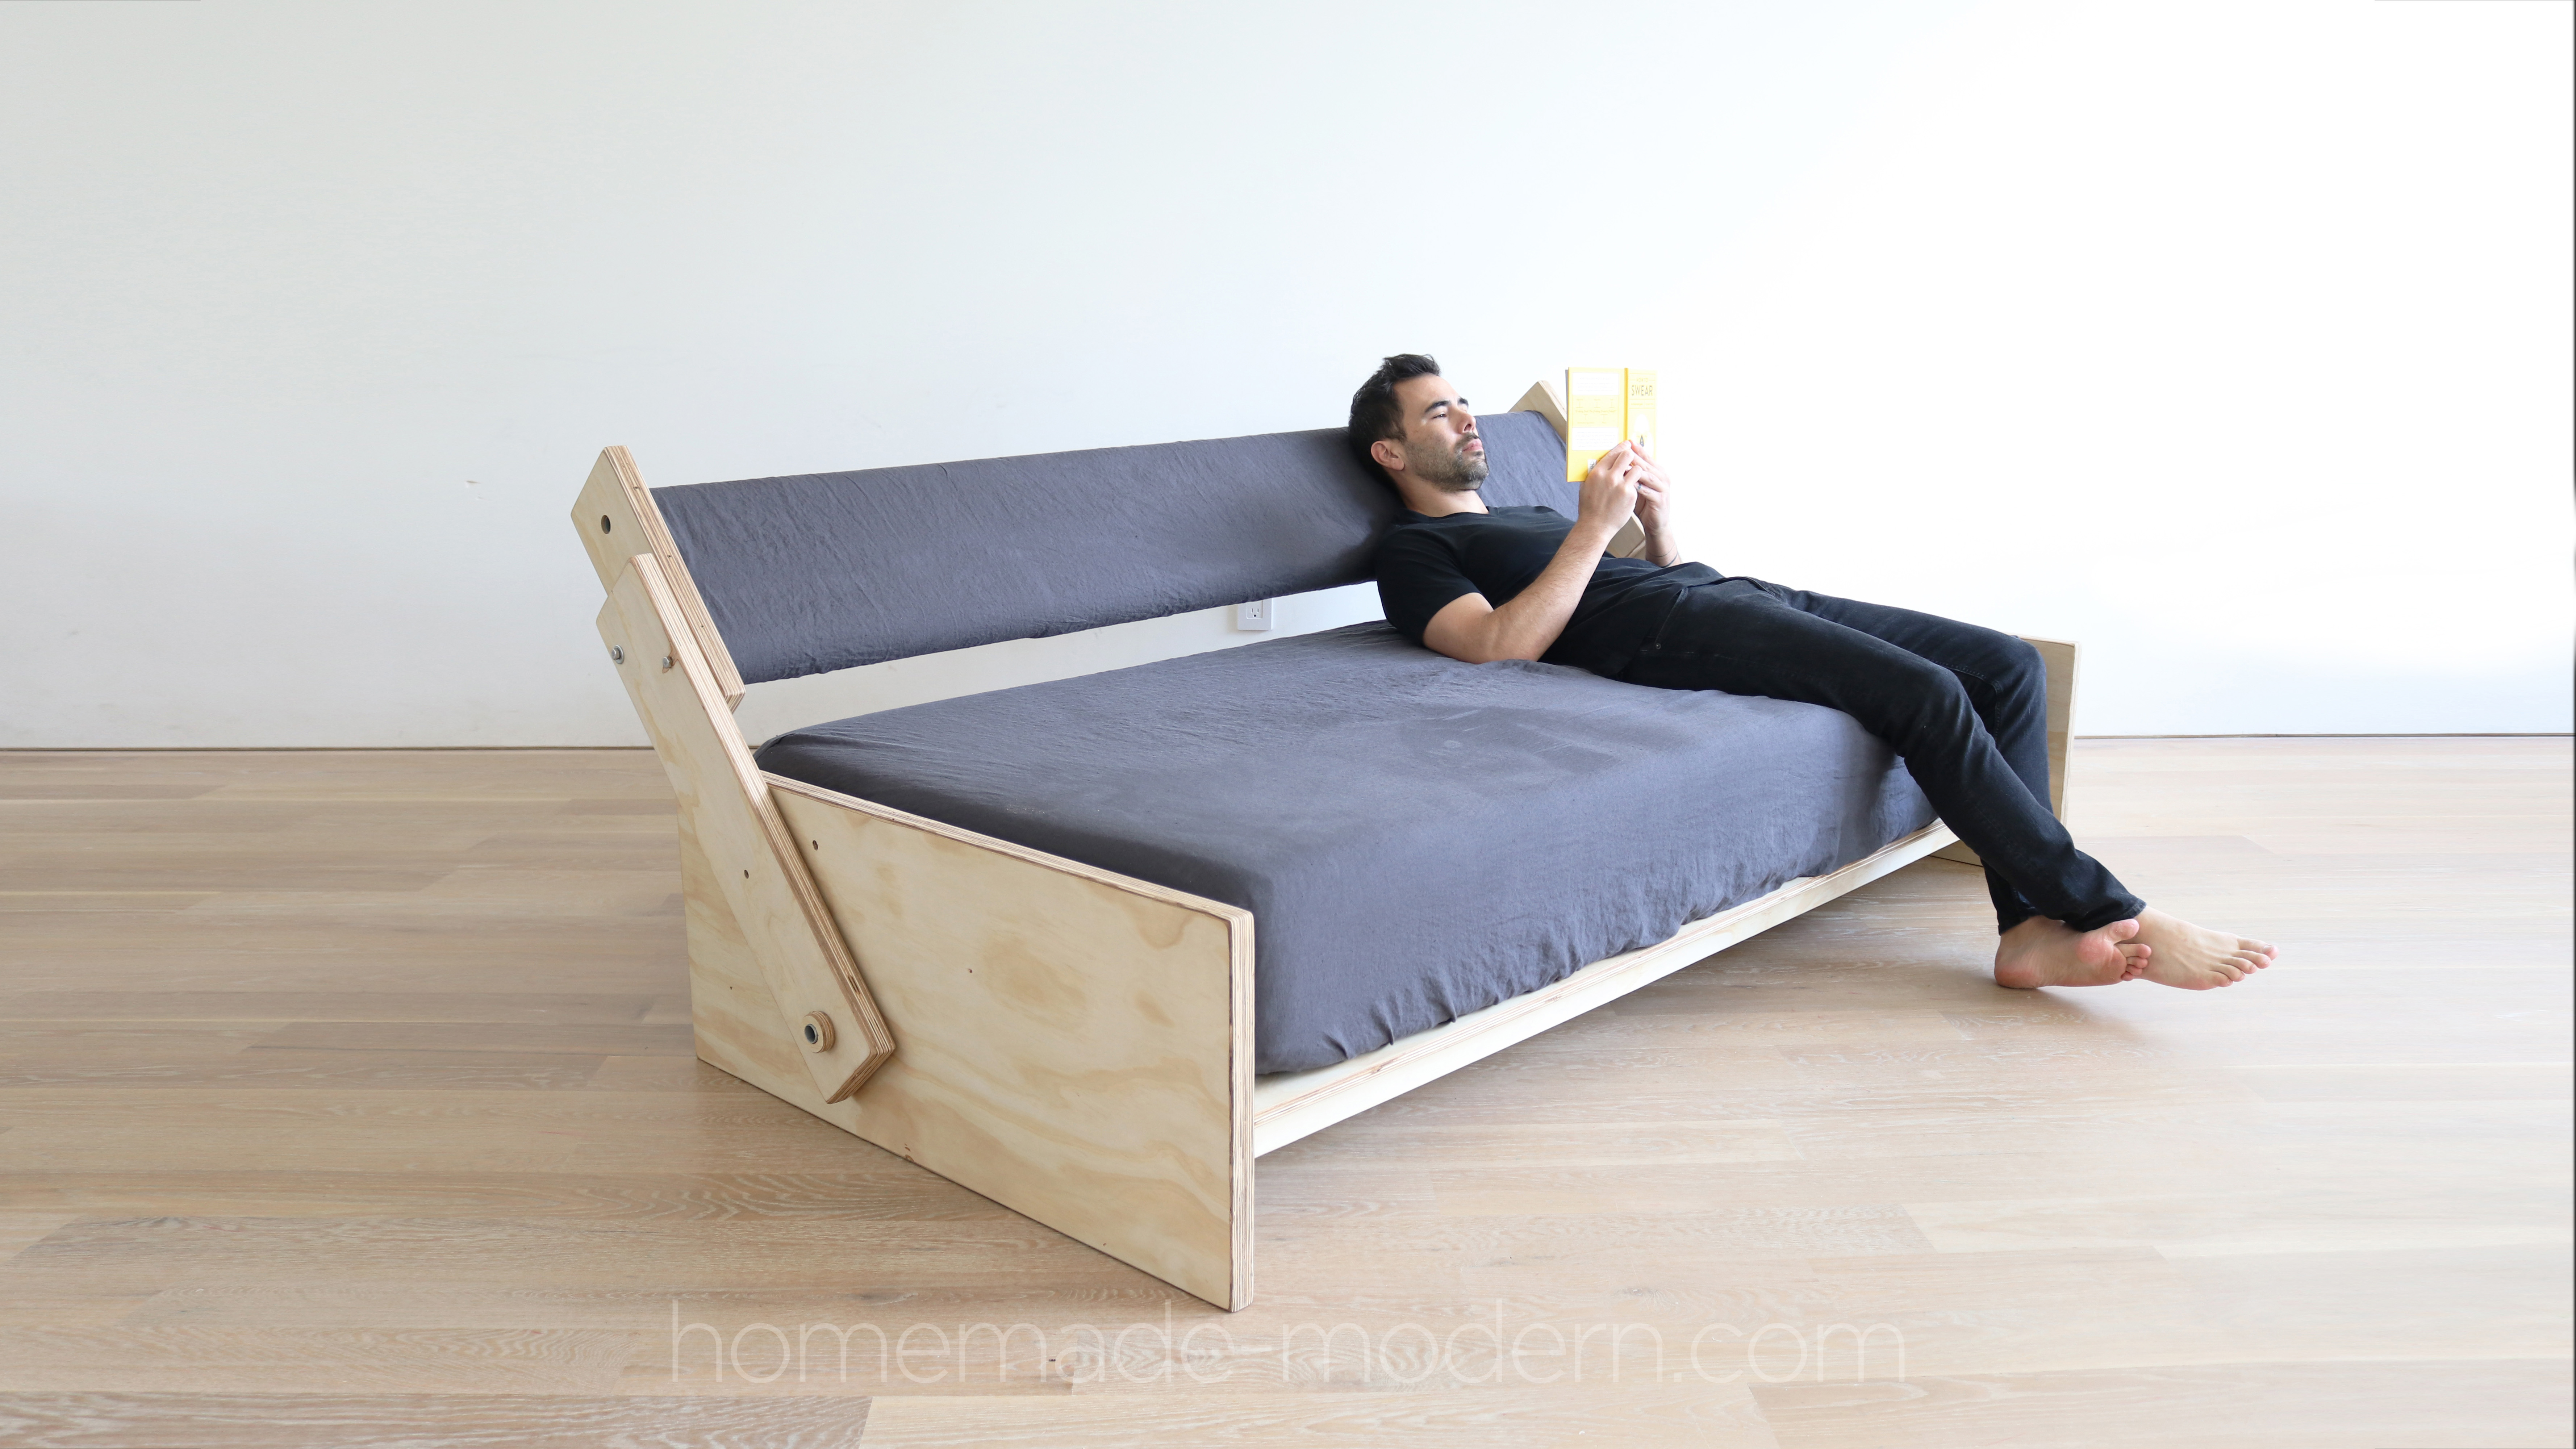 HomeMade Modern EP150 DIY Sofa